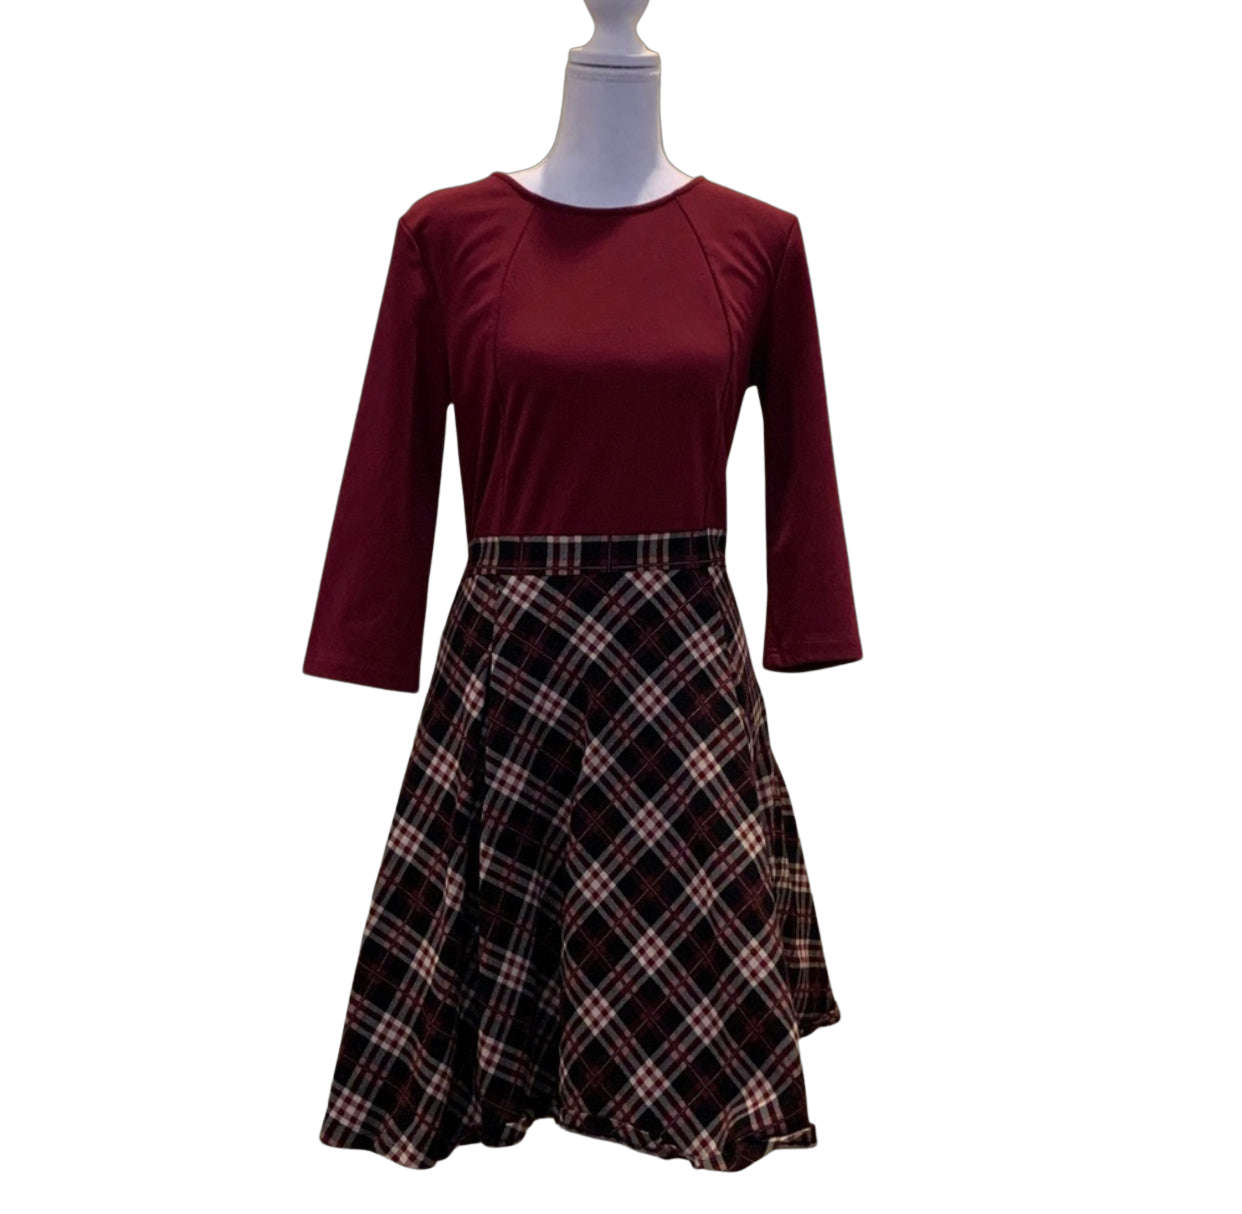 Miusol Retro Inspired Plaid Dress, Size Medium (US Size 8) - Gently Used